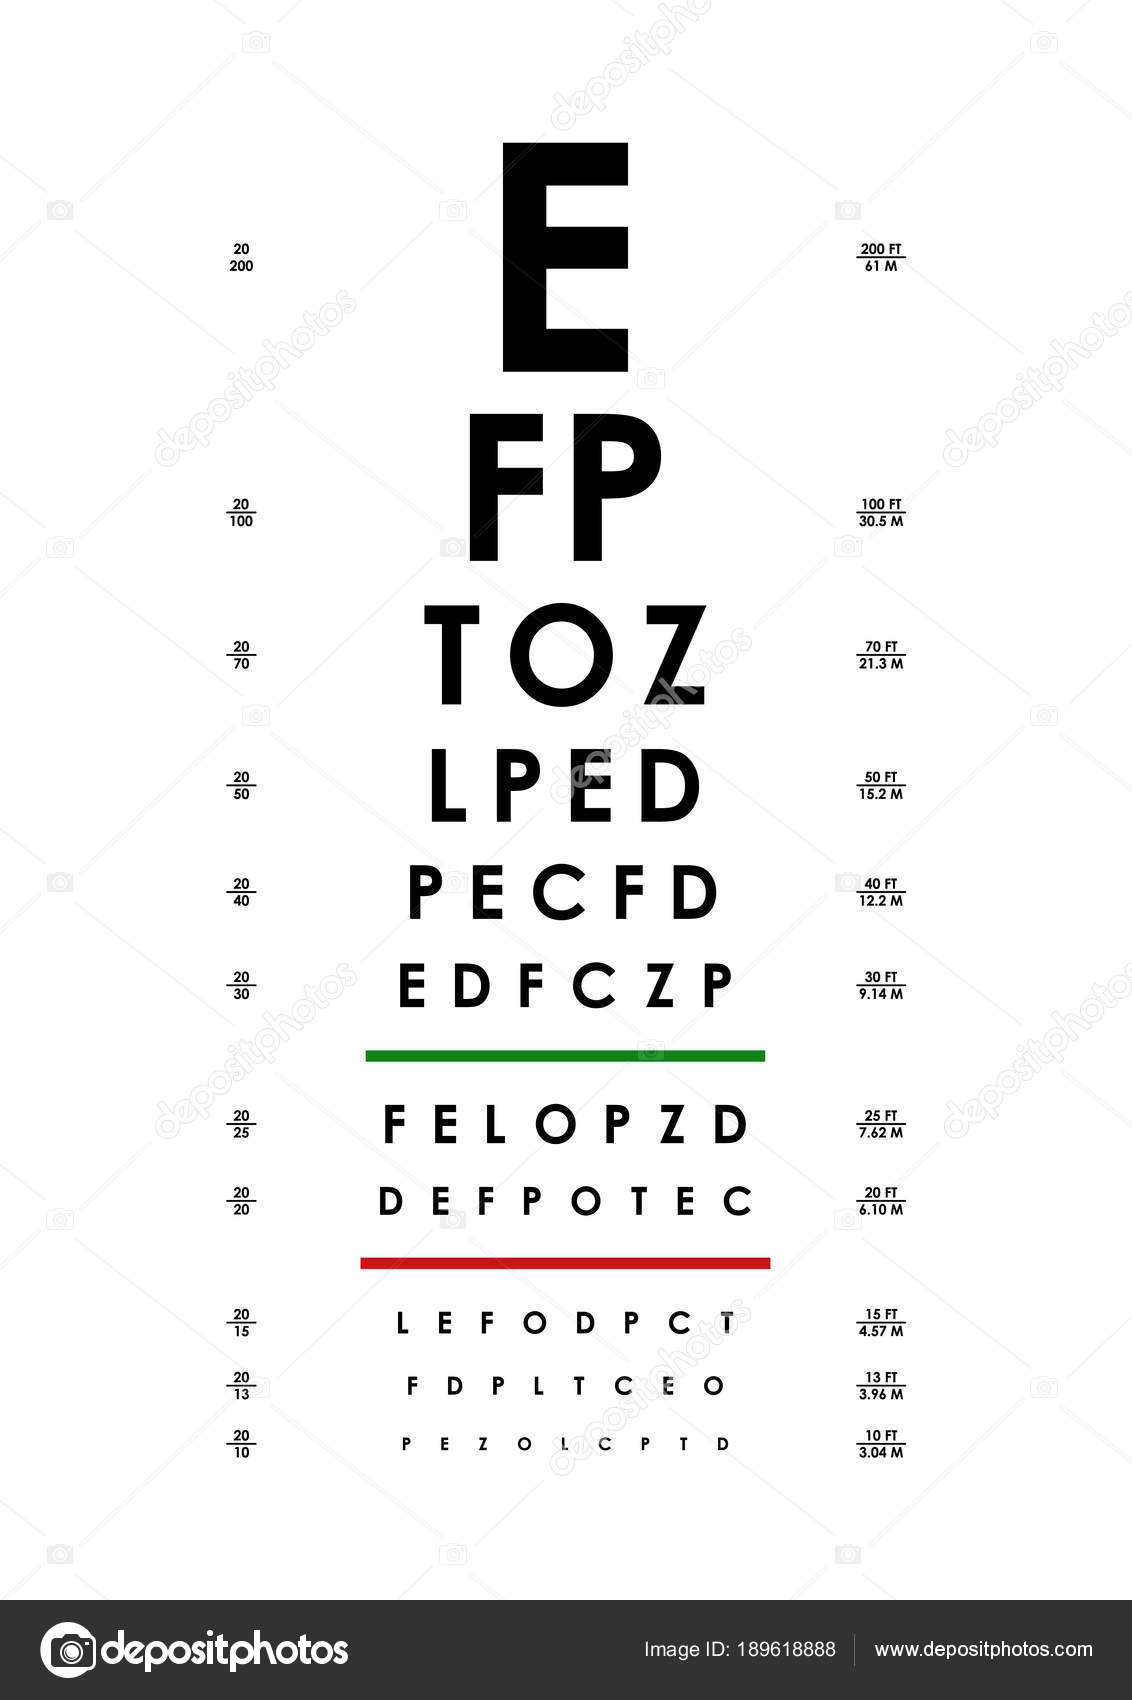 https://st3.depositphotos.com/9129706/18961/v/1600/depositphotos_189618888-stock-illustration-poster-card-of-vision-testing.jpg